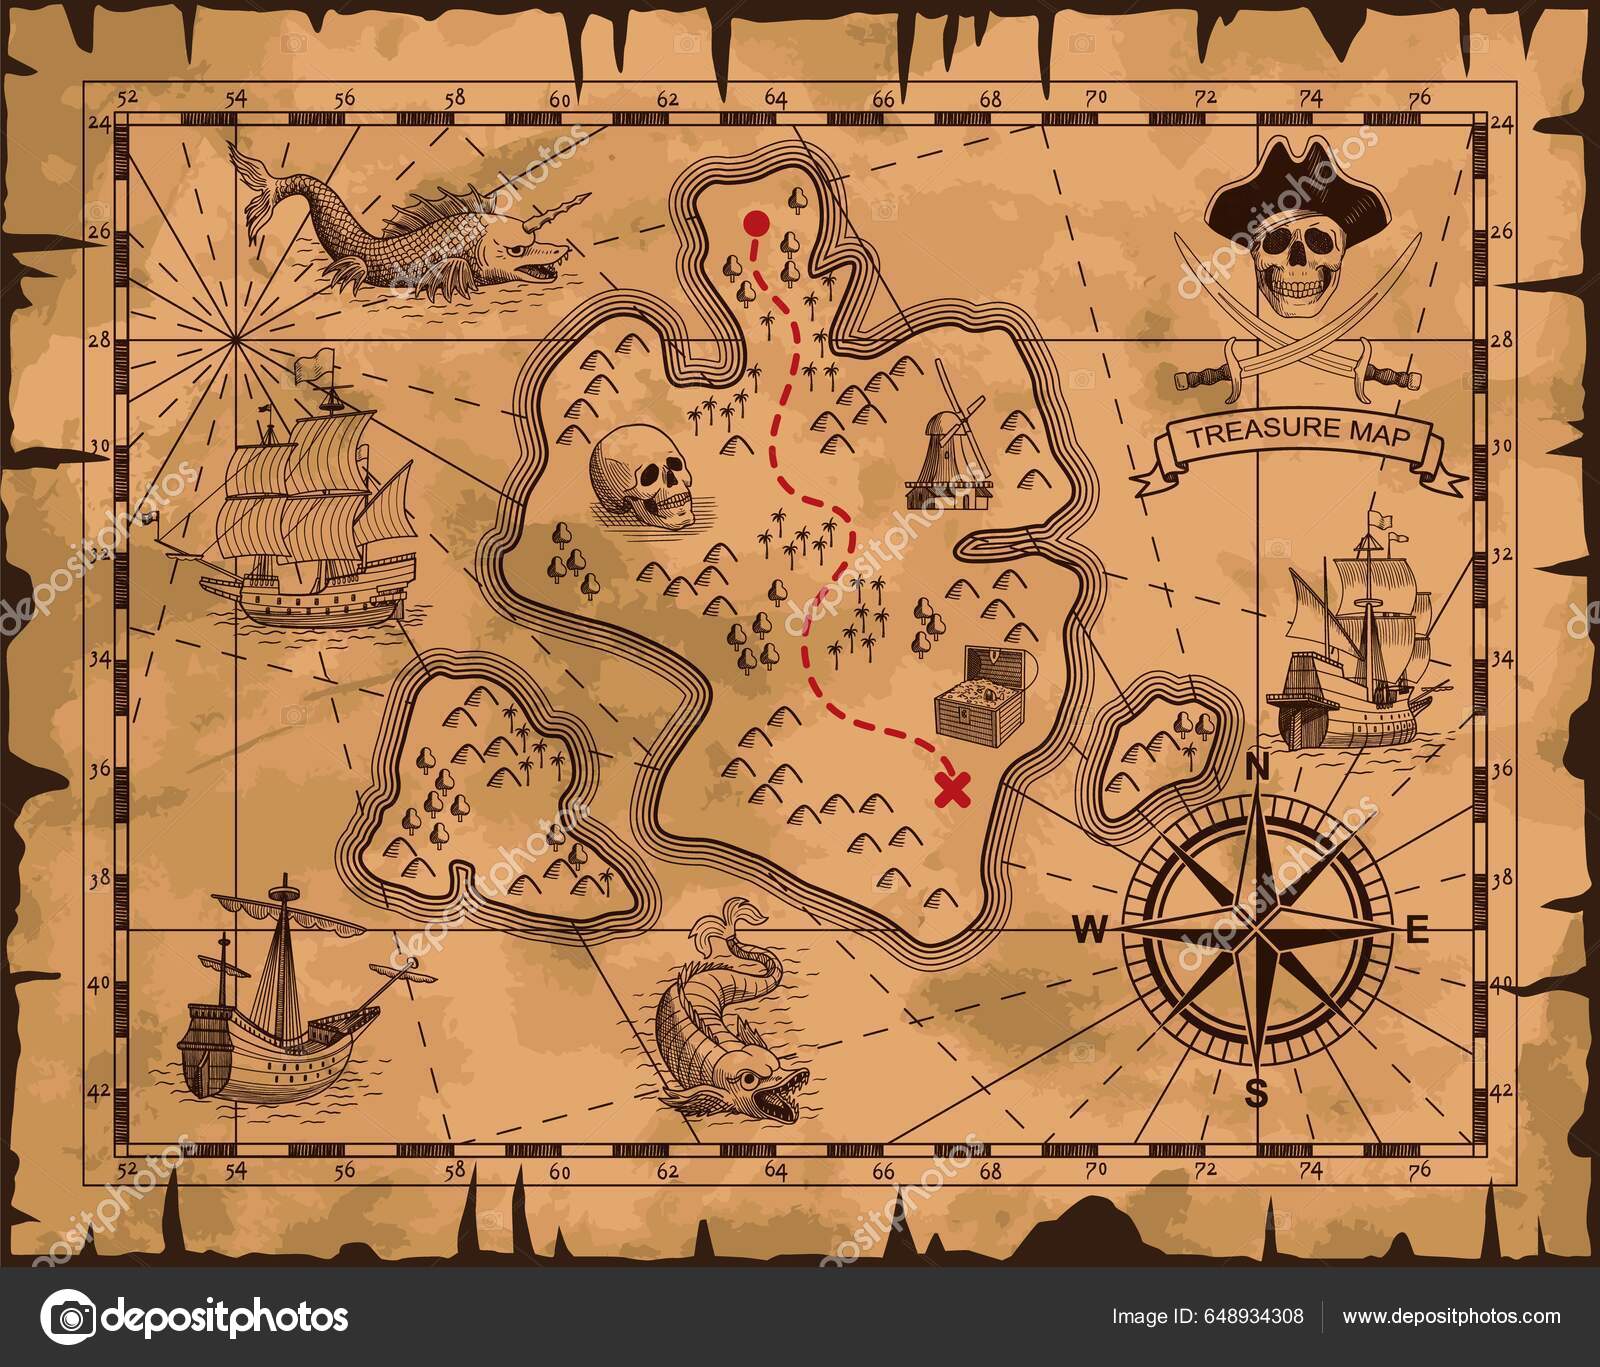 Treasure Maps Hd Transparent, Gold Treasure Map Clip Art, Treasure Map  Clipart, Gold, Treasure Map PNG Image For Free Download